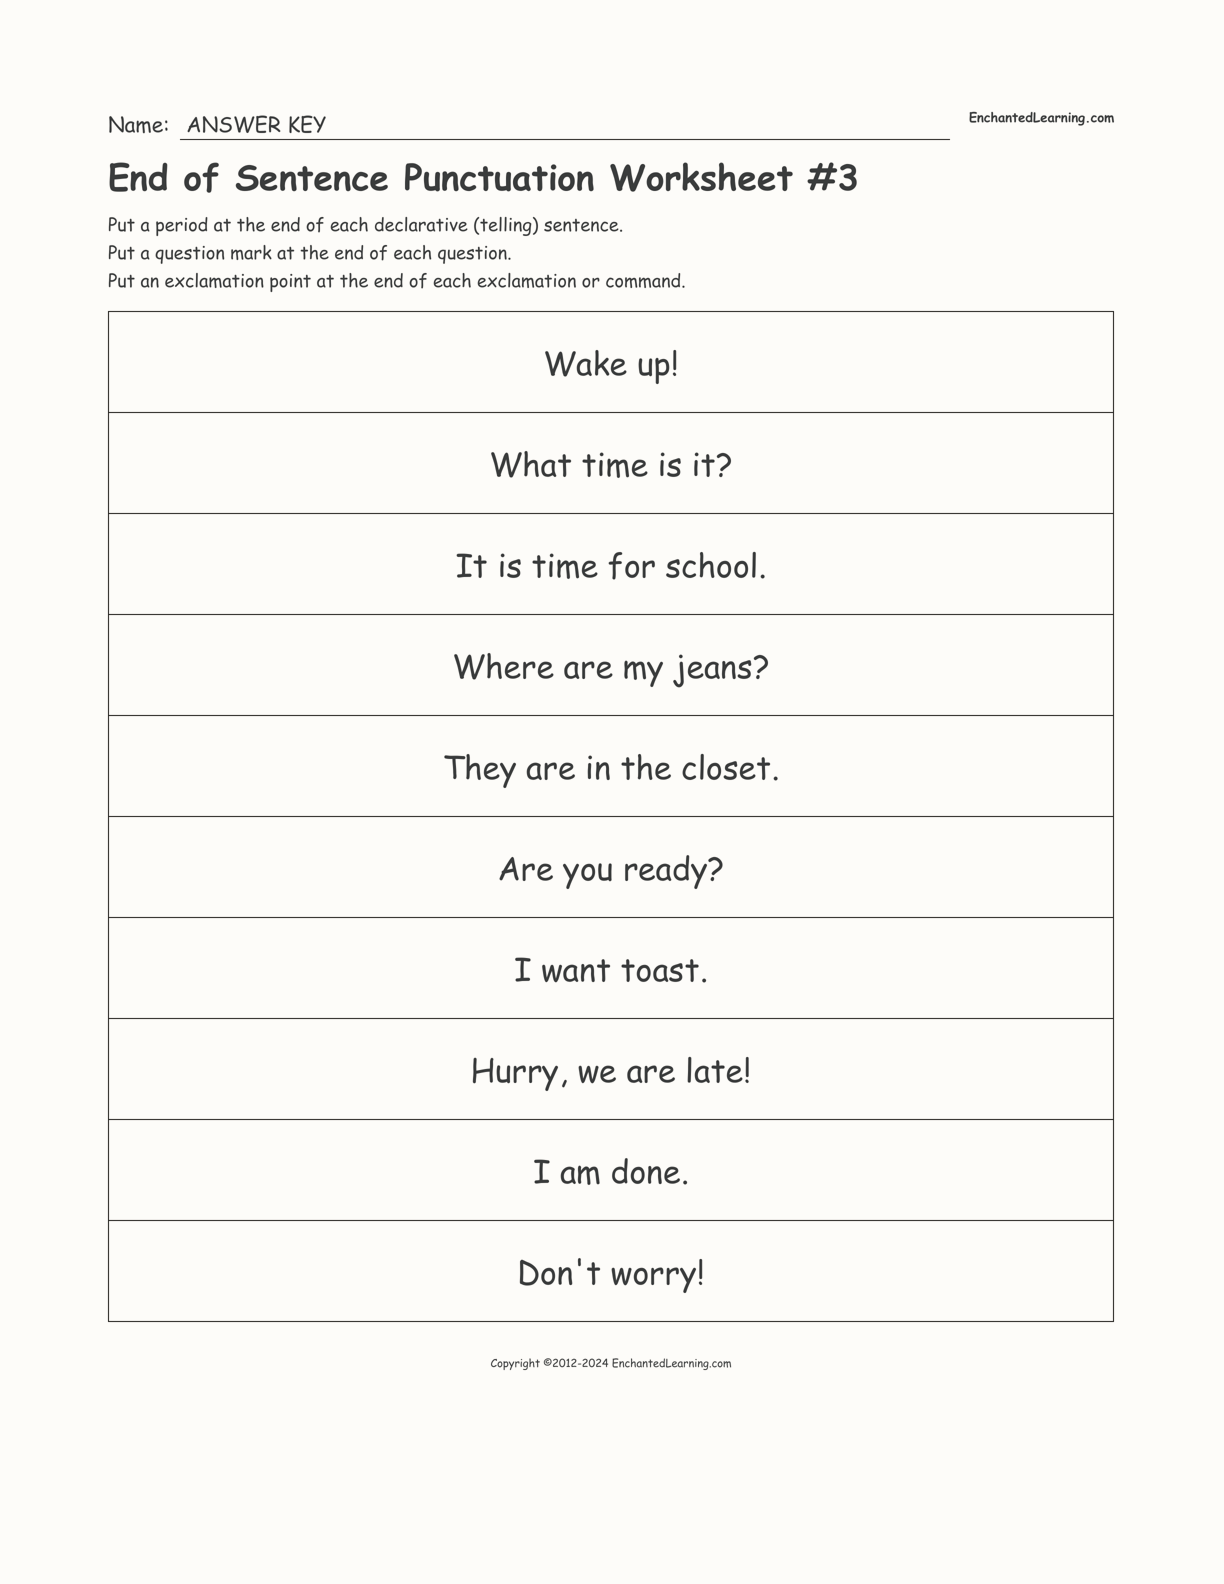 End of Sentence Punctuation Worksheet #3 interactive worksheet page 2